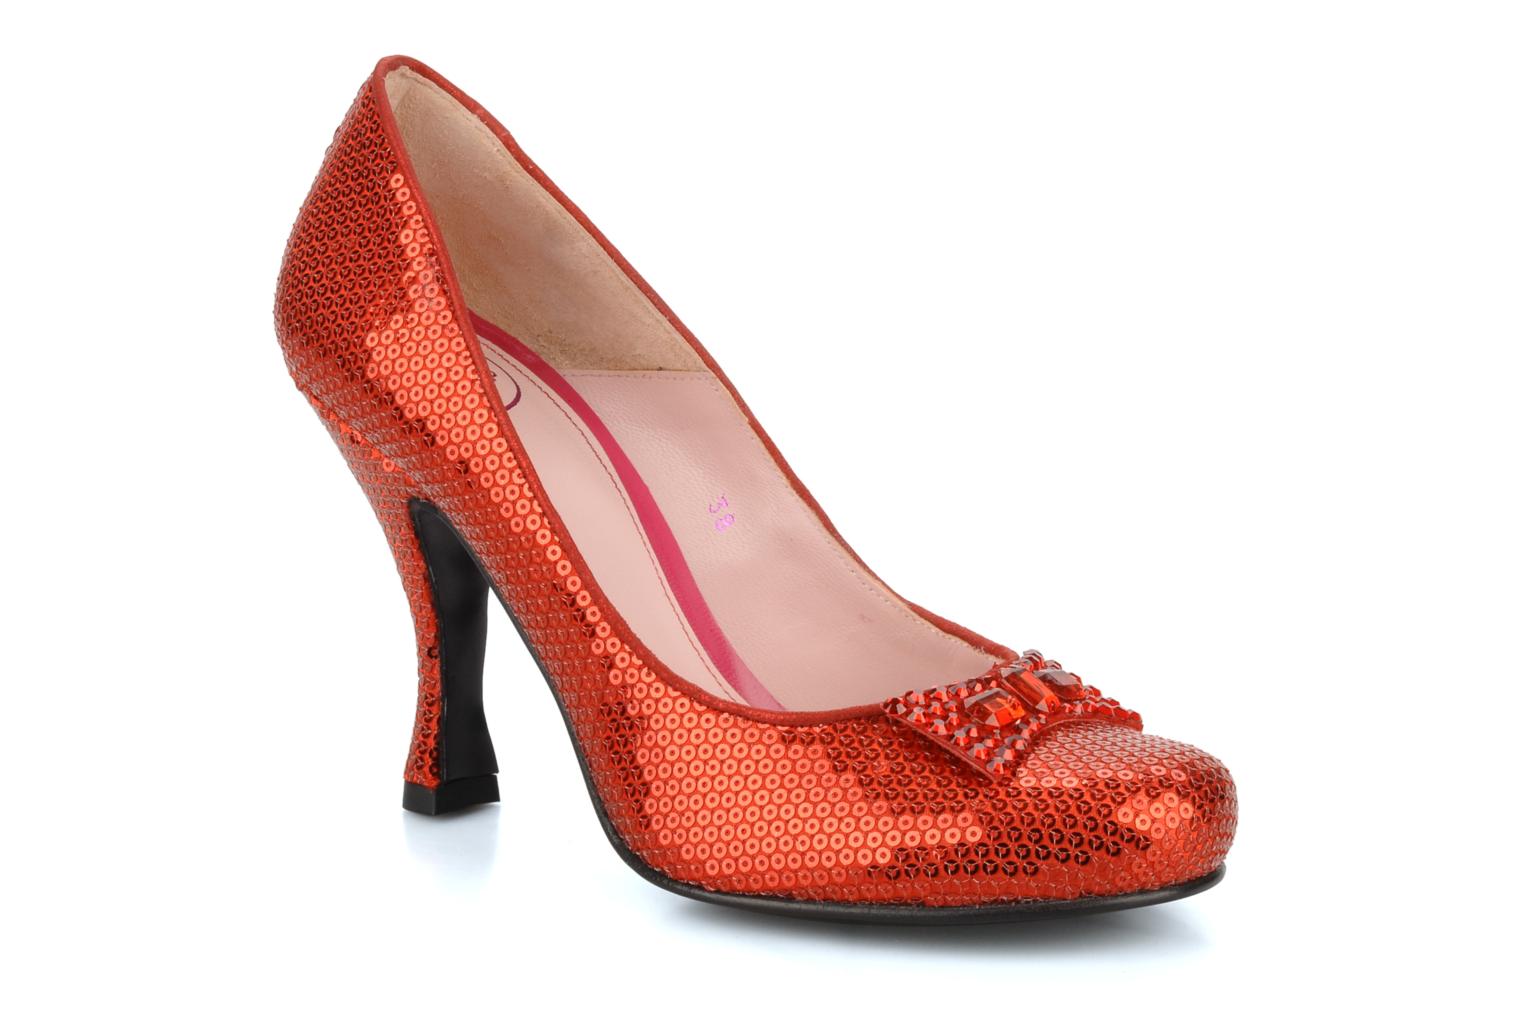 Annabel Winship Irresistible (Red) - High heels chez Sarenza (93343)